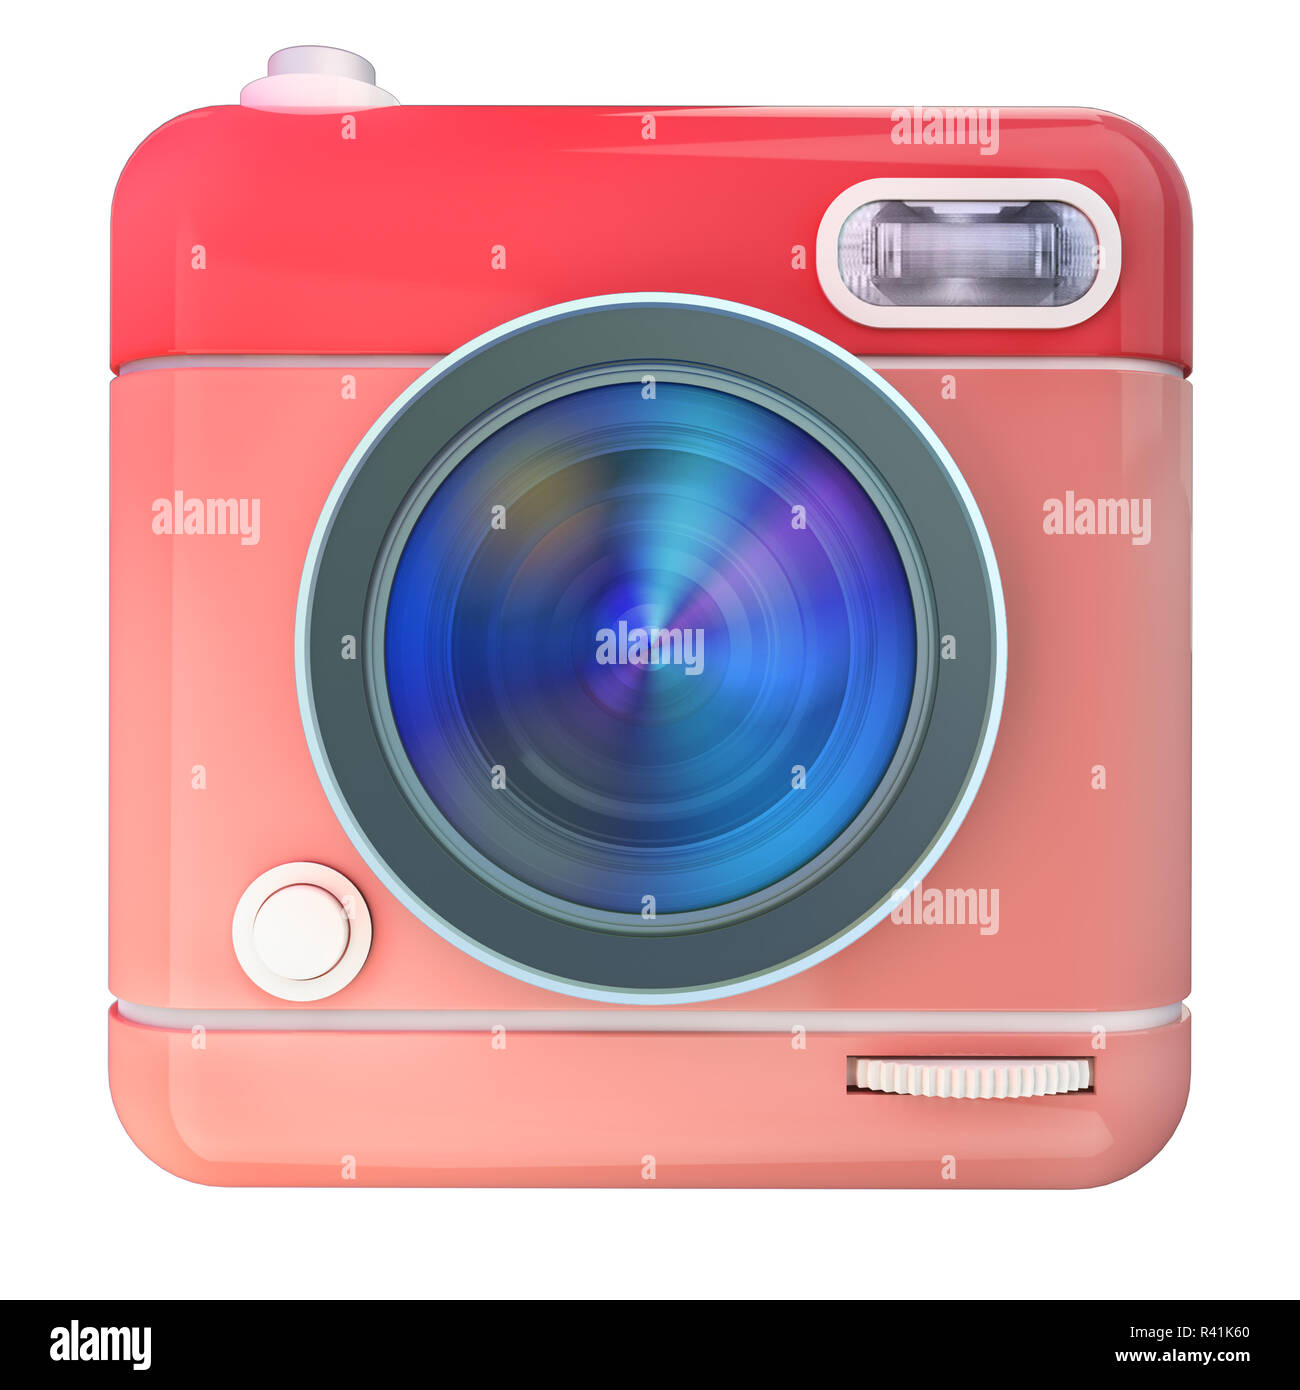 Camera Icon Pink R41K60 